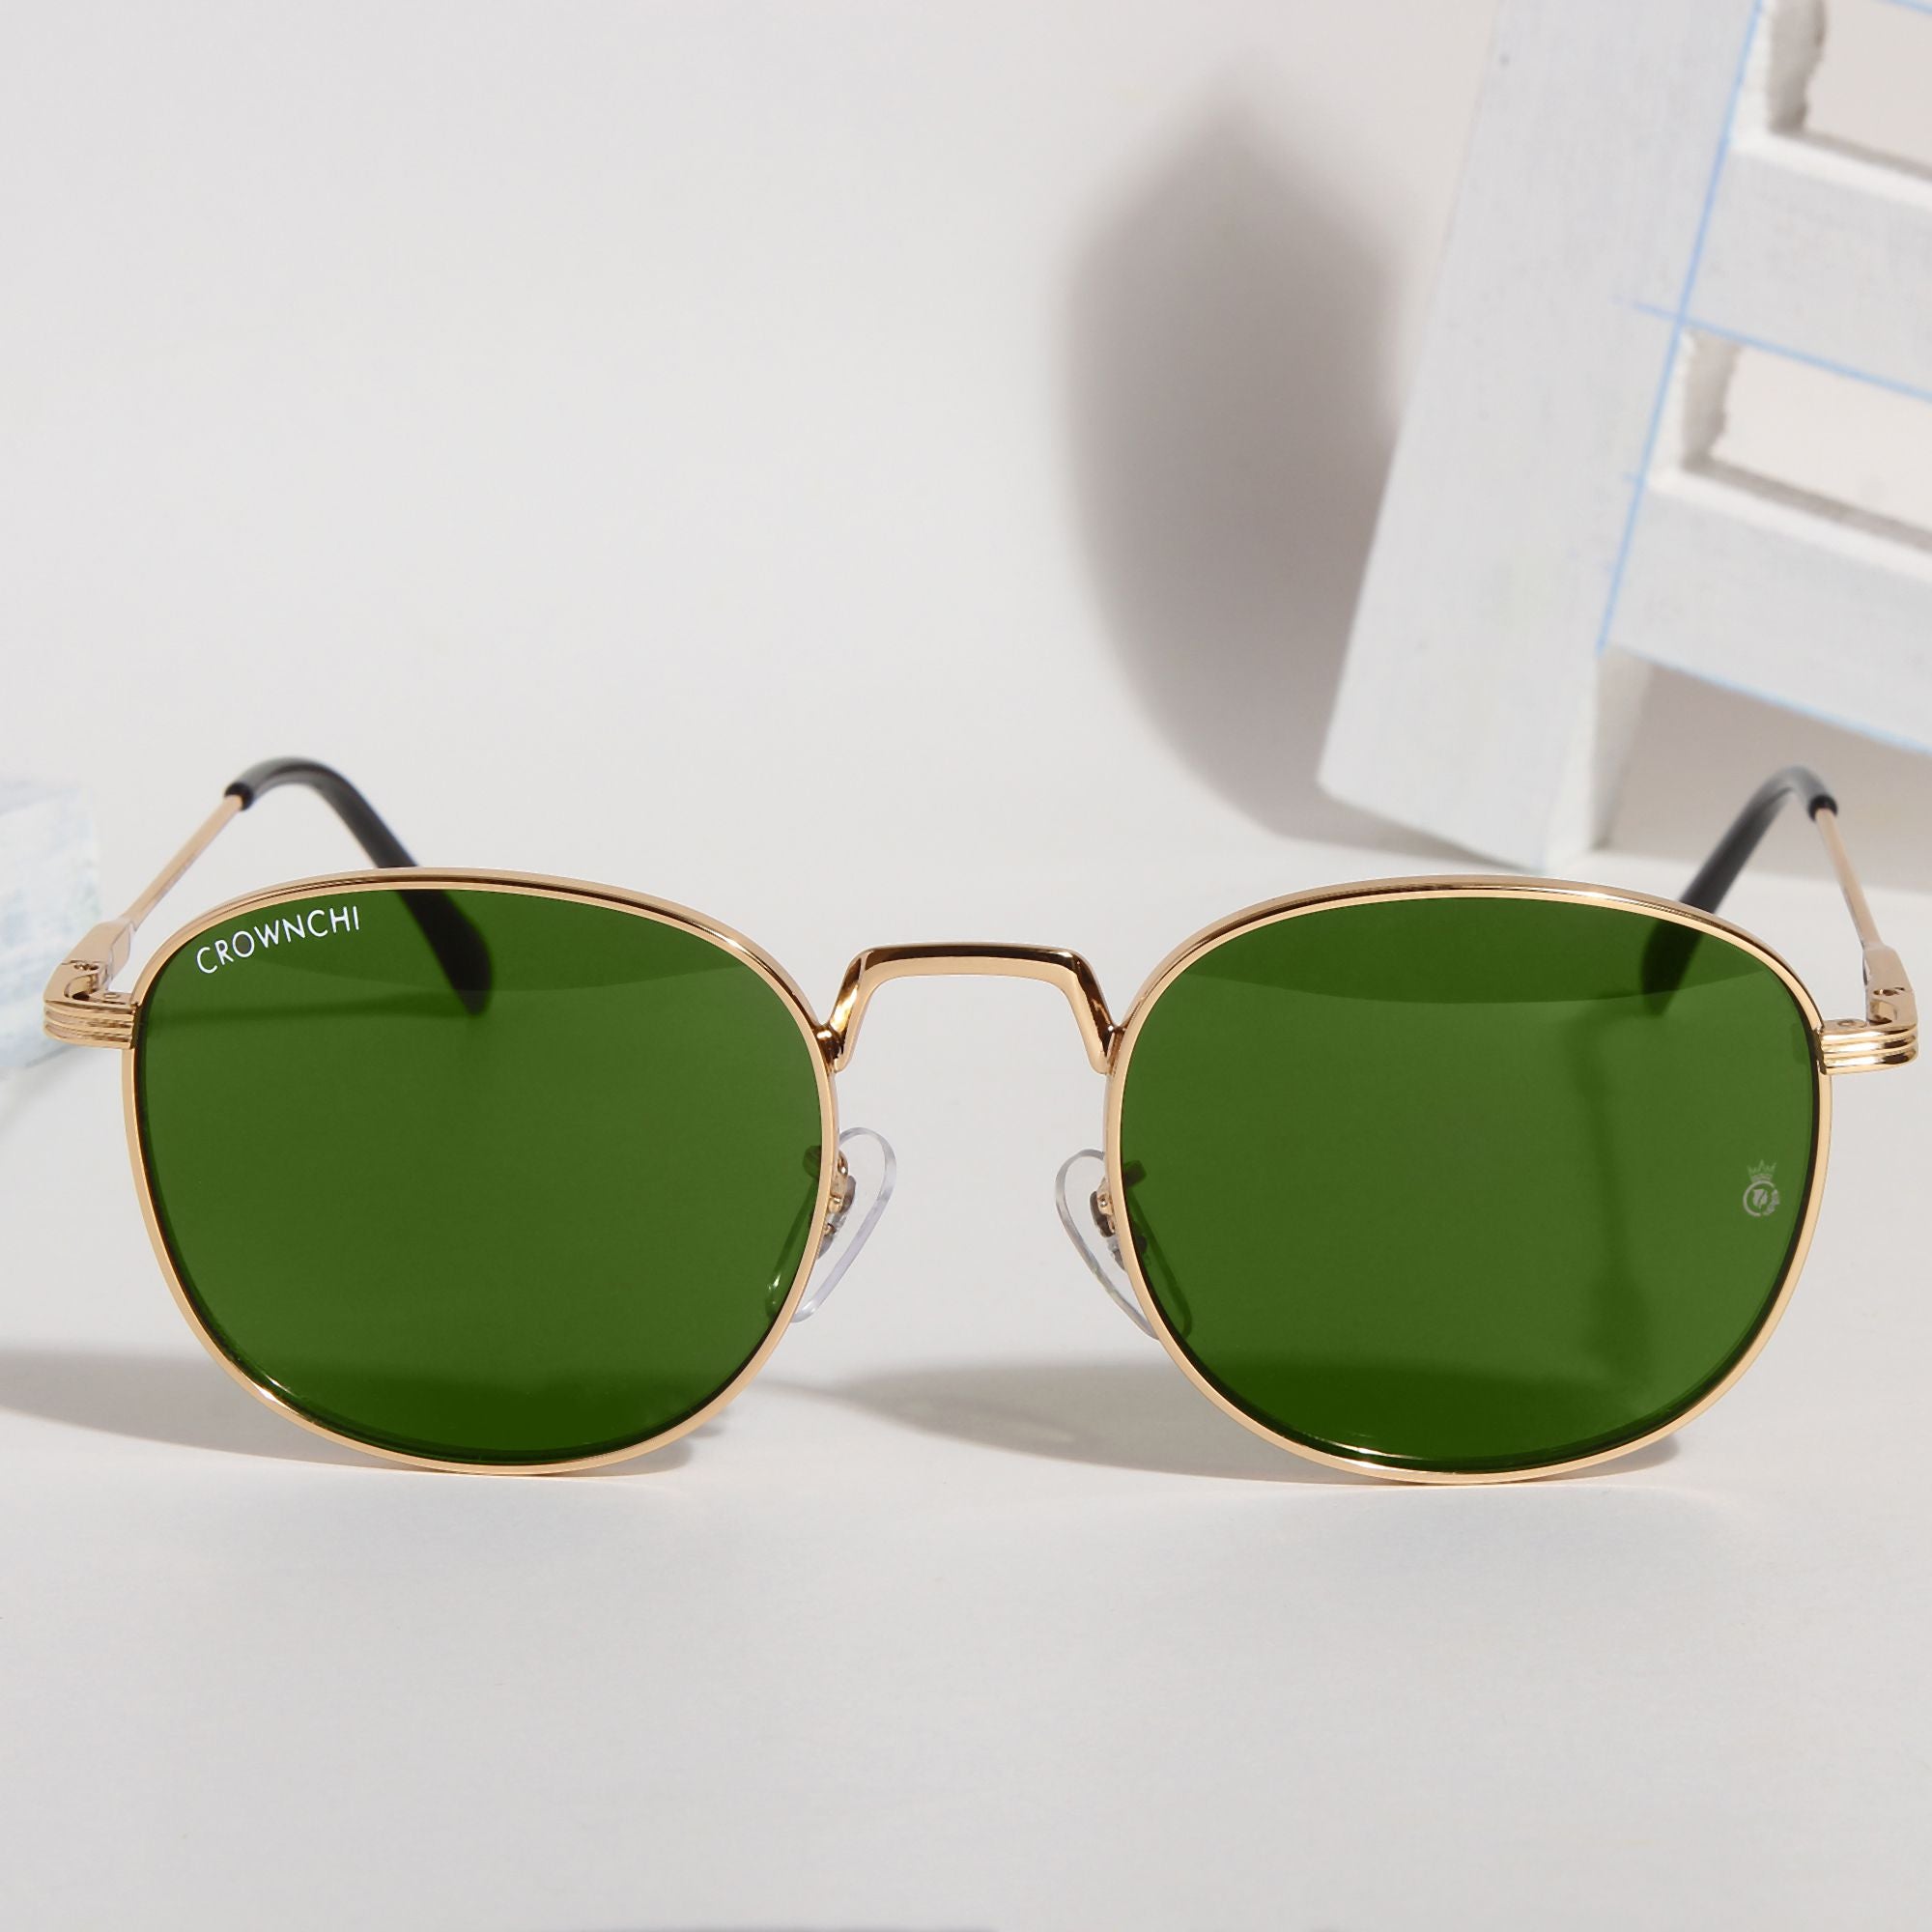 Crownchi Martin Gold Green Round Edition Sunglasses